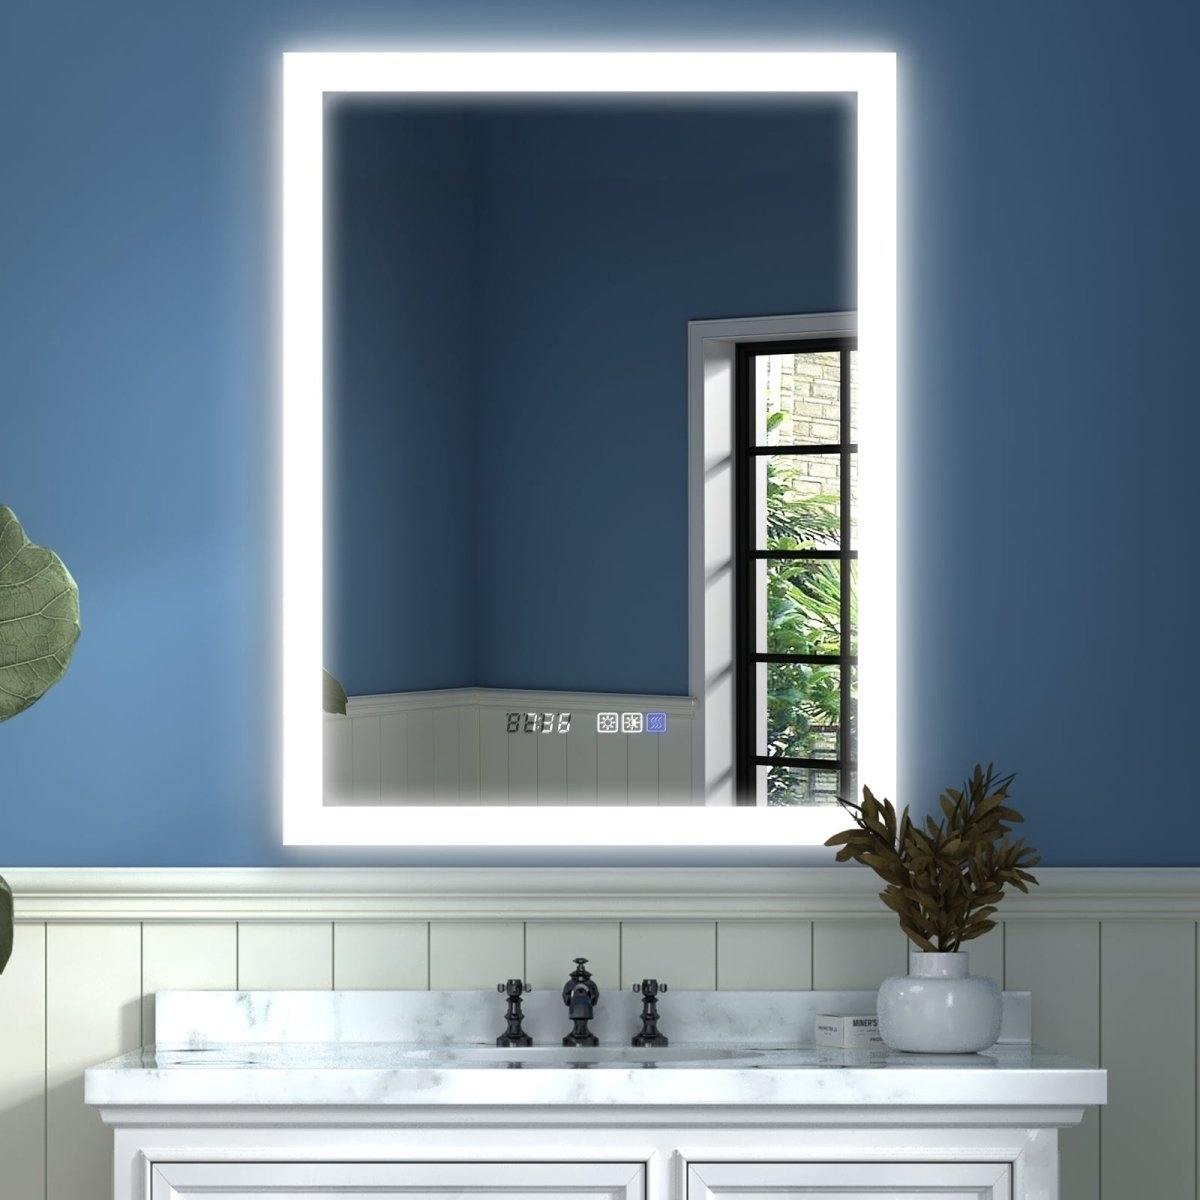 ExBrite 24 x 36 inch Vanity Mirror And Lights Led Bathroom Mirror - Back light